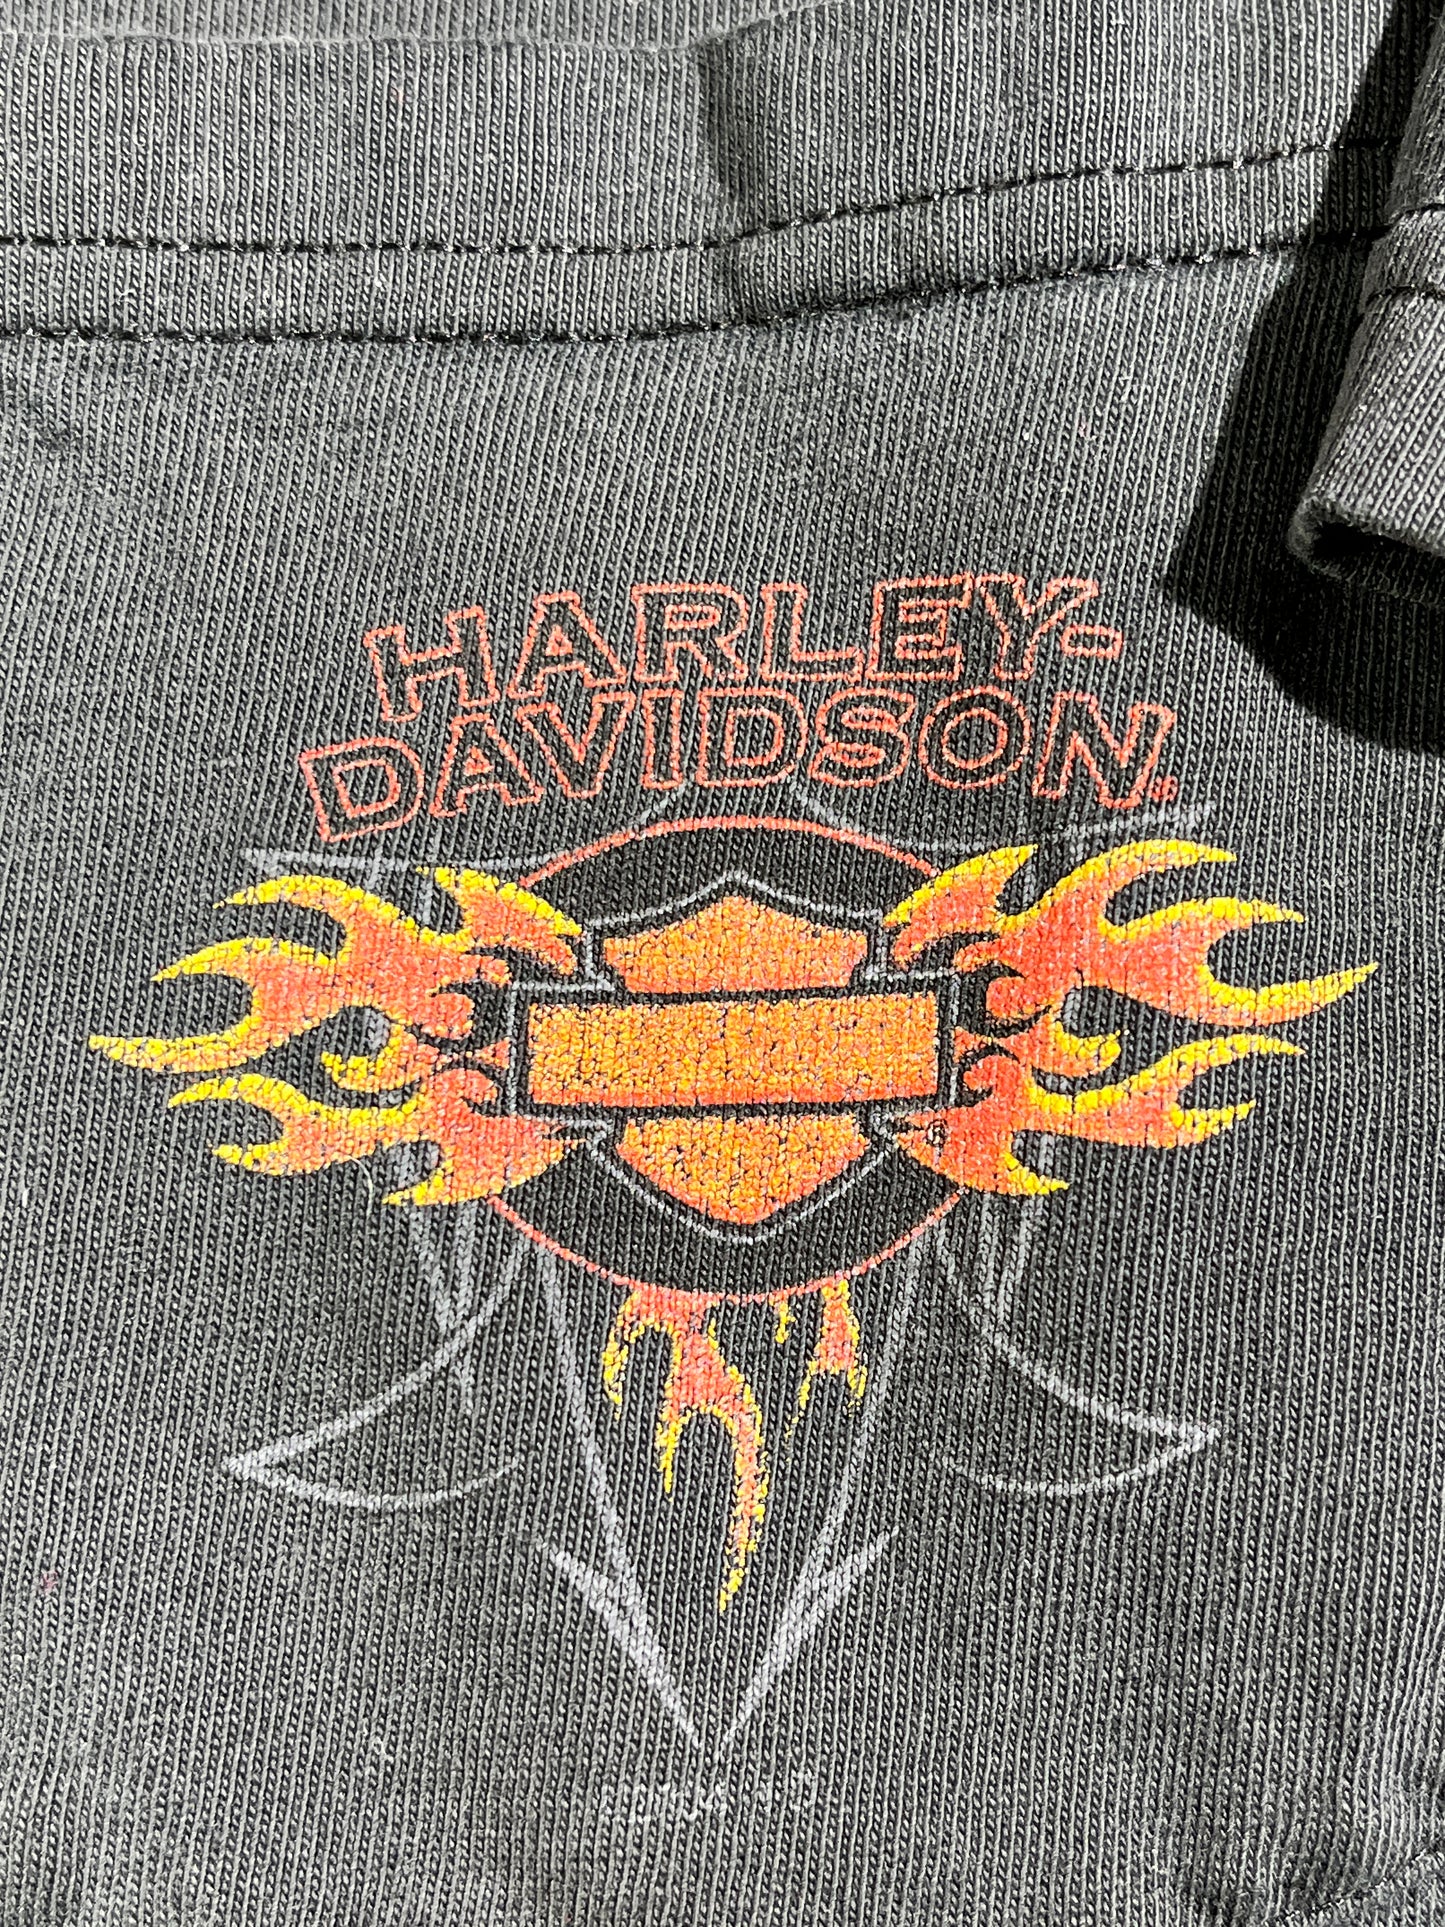 Vintage Harley Davidson T-Shirt Pocket Tee Charleston South Carolina Low Country Distressed